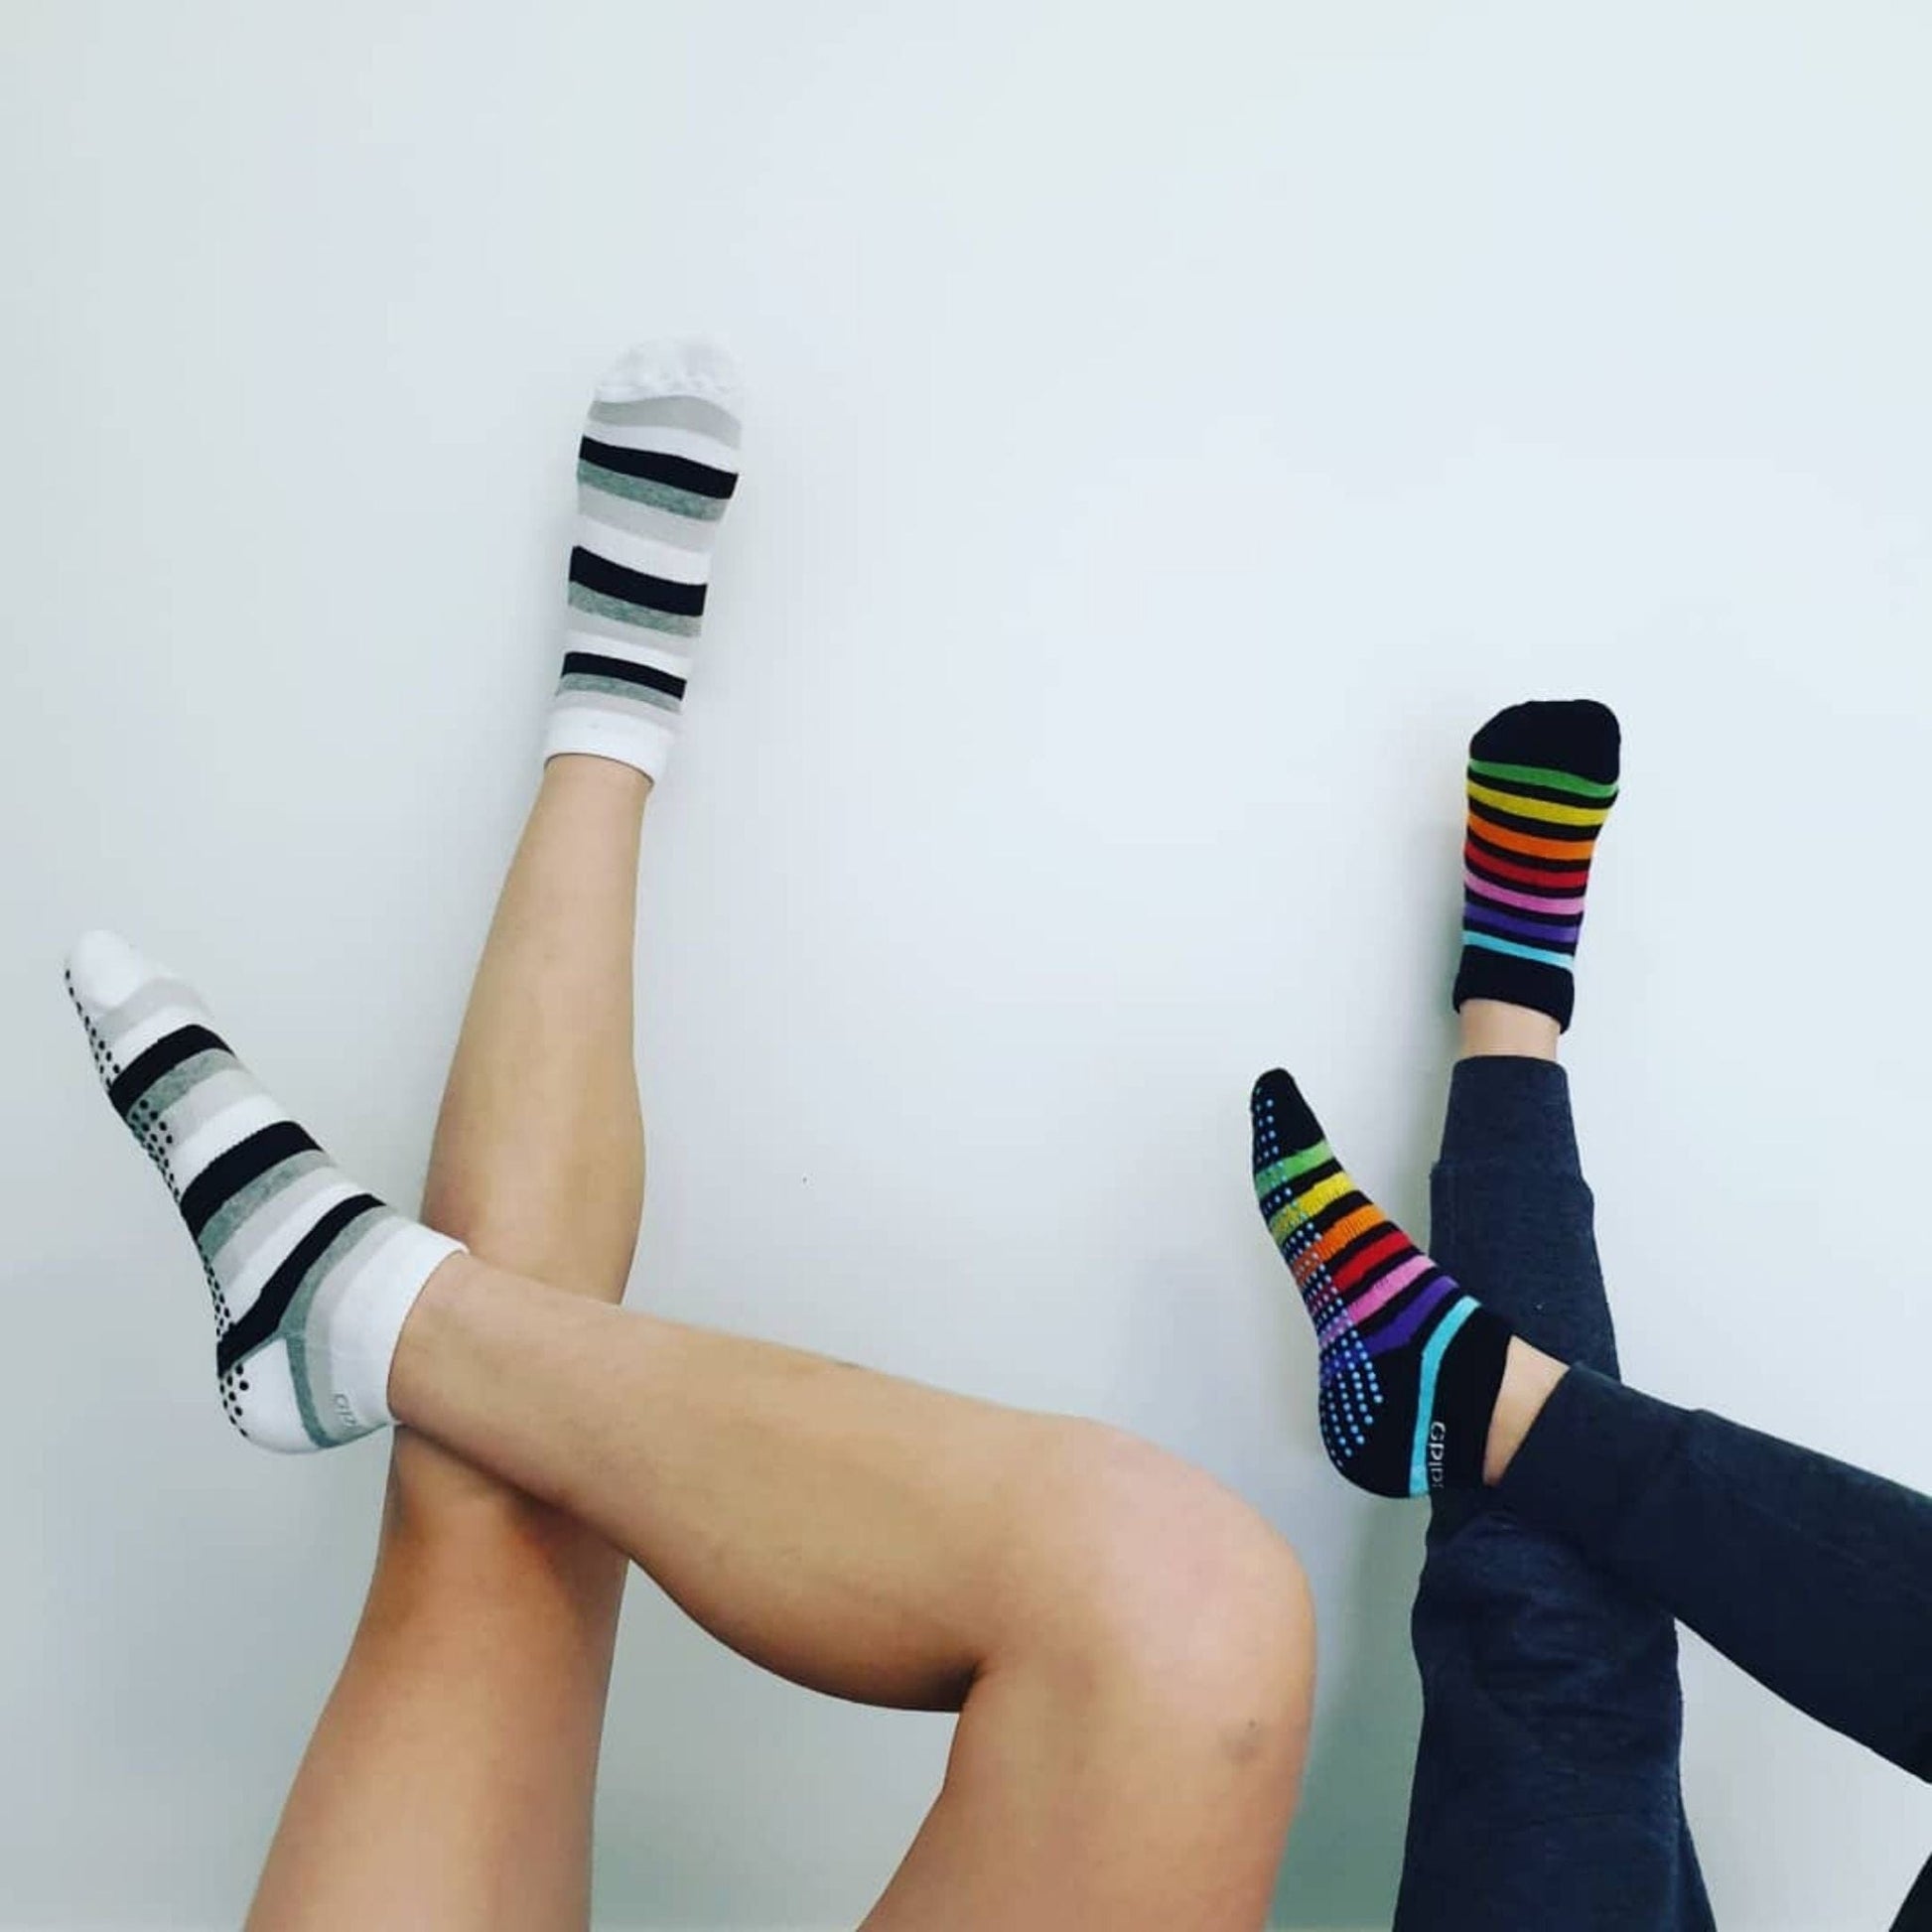 Gripperz Adult Grip Socks - Non Slip Ankle Socks, Caring Clothing